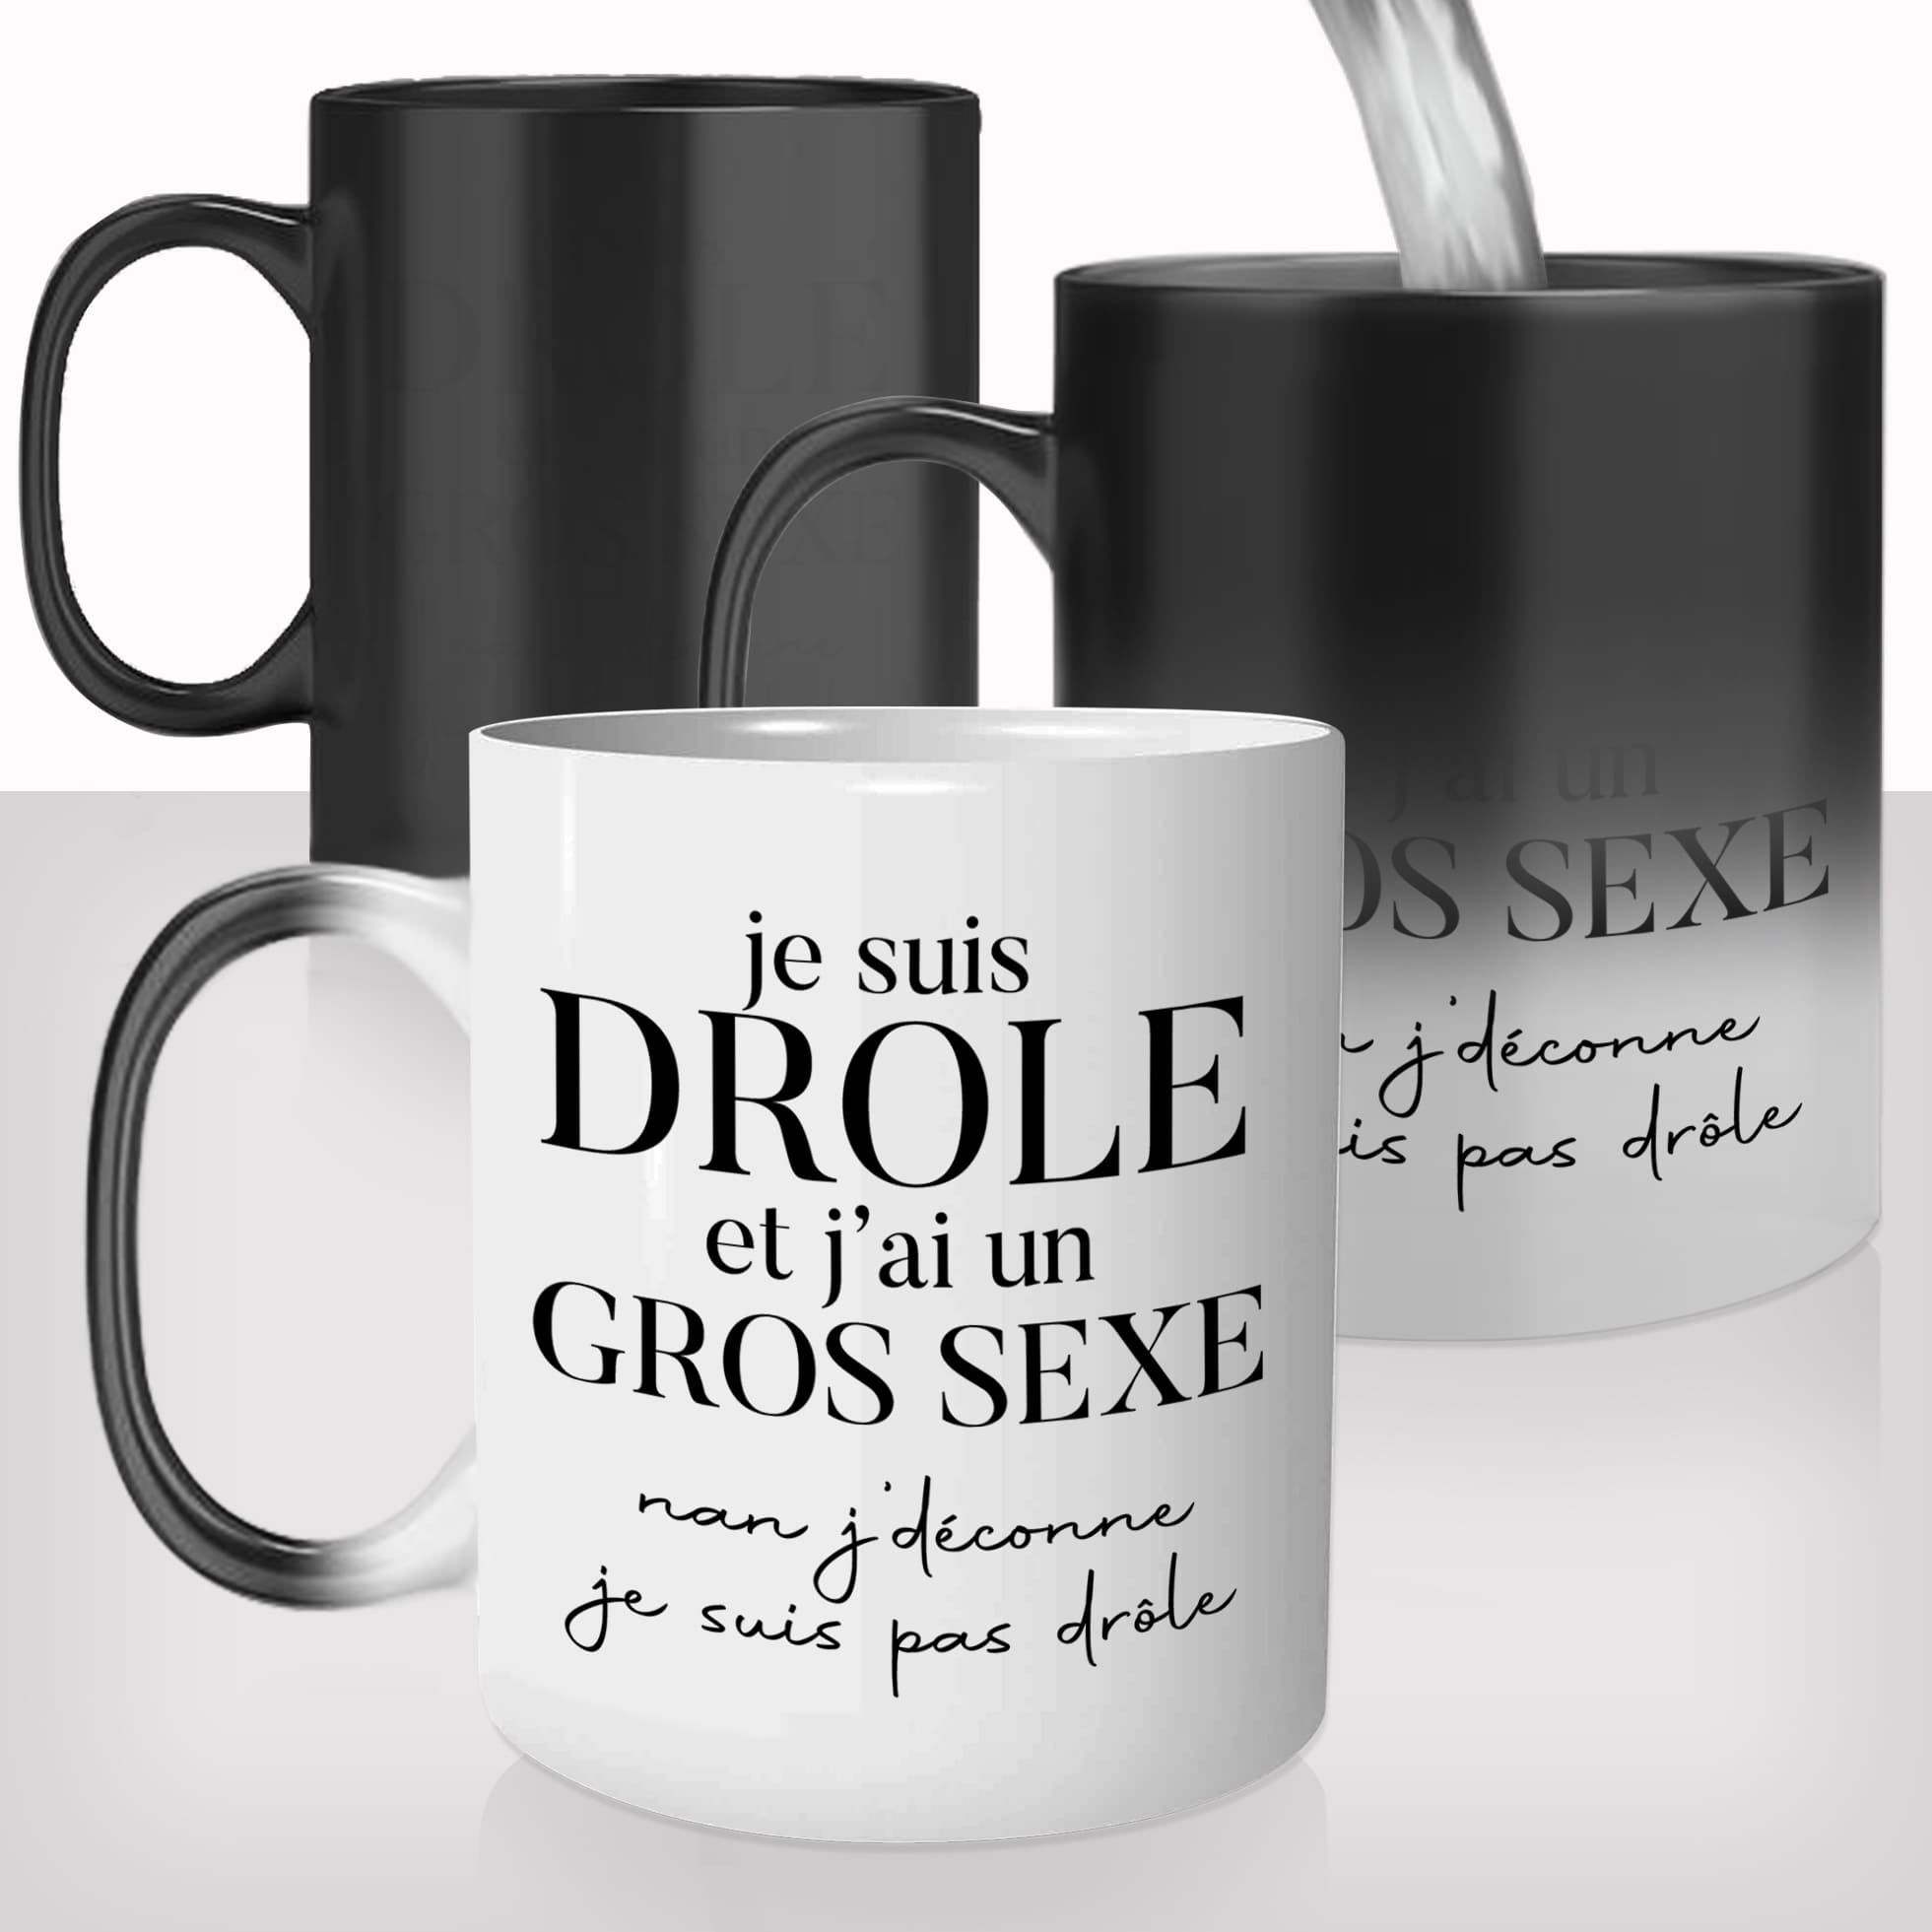 https://media.cdnws.com/_i/273136/2957/1109/61/mug-tasse-magique-thermique-thermoreactif-personnalise-personnalisable-je-suis-drole-gros-sexe-zizi-penis-homme-idee-cadeau-original-cafe-the.jpeg